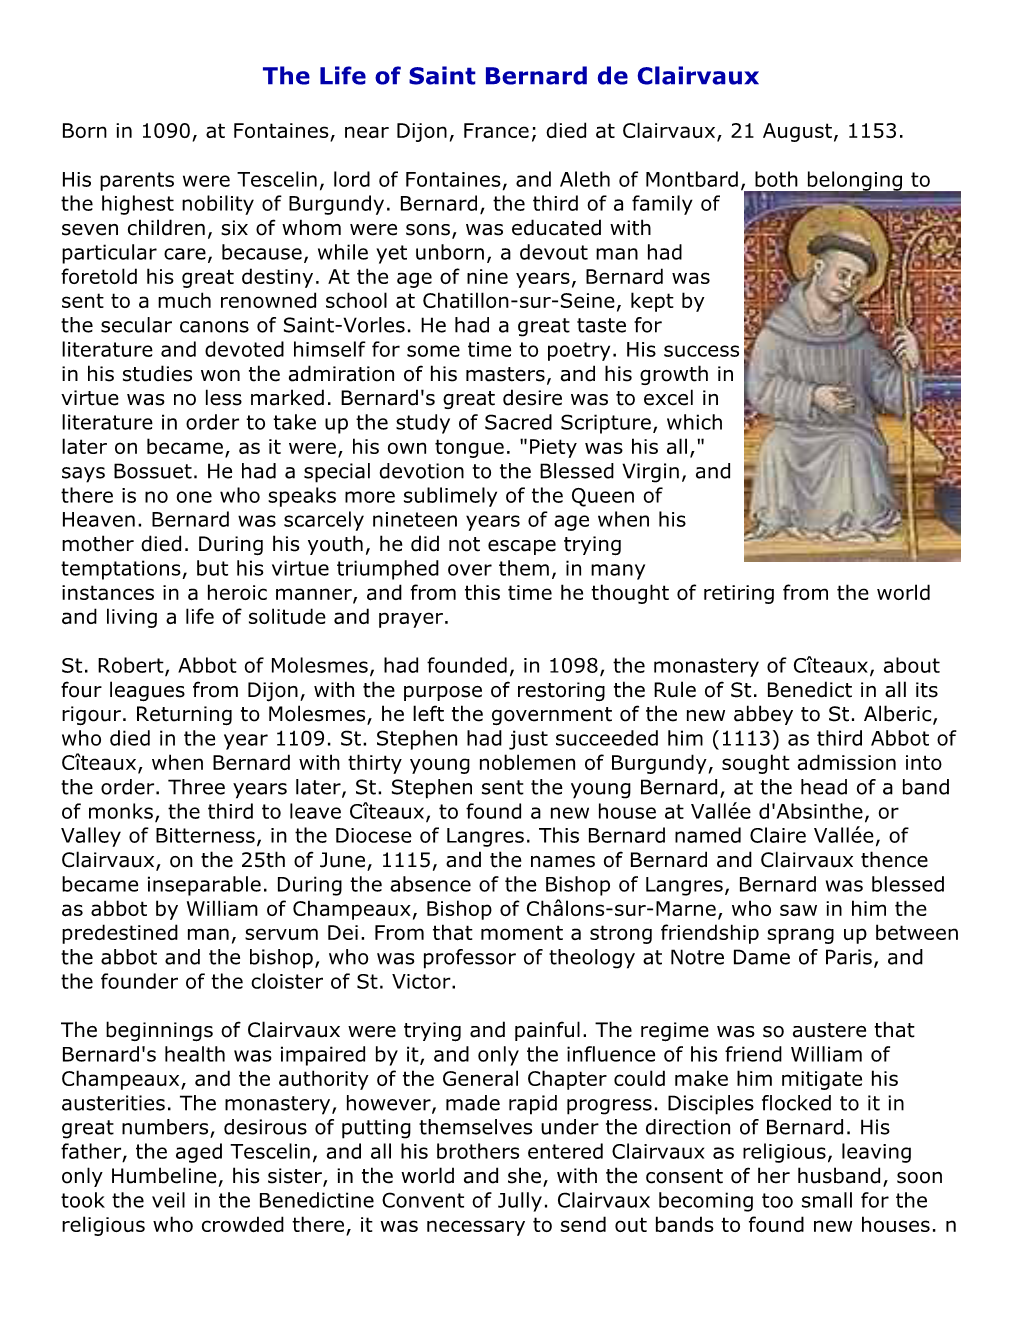 The Life of Saint Bernard De Clairvaux